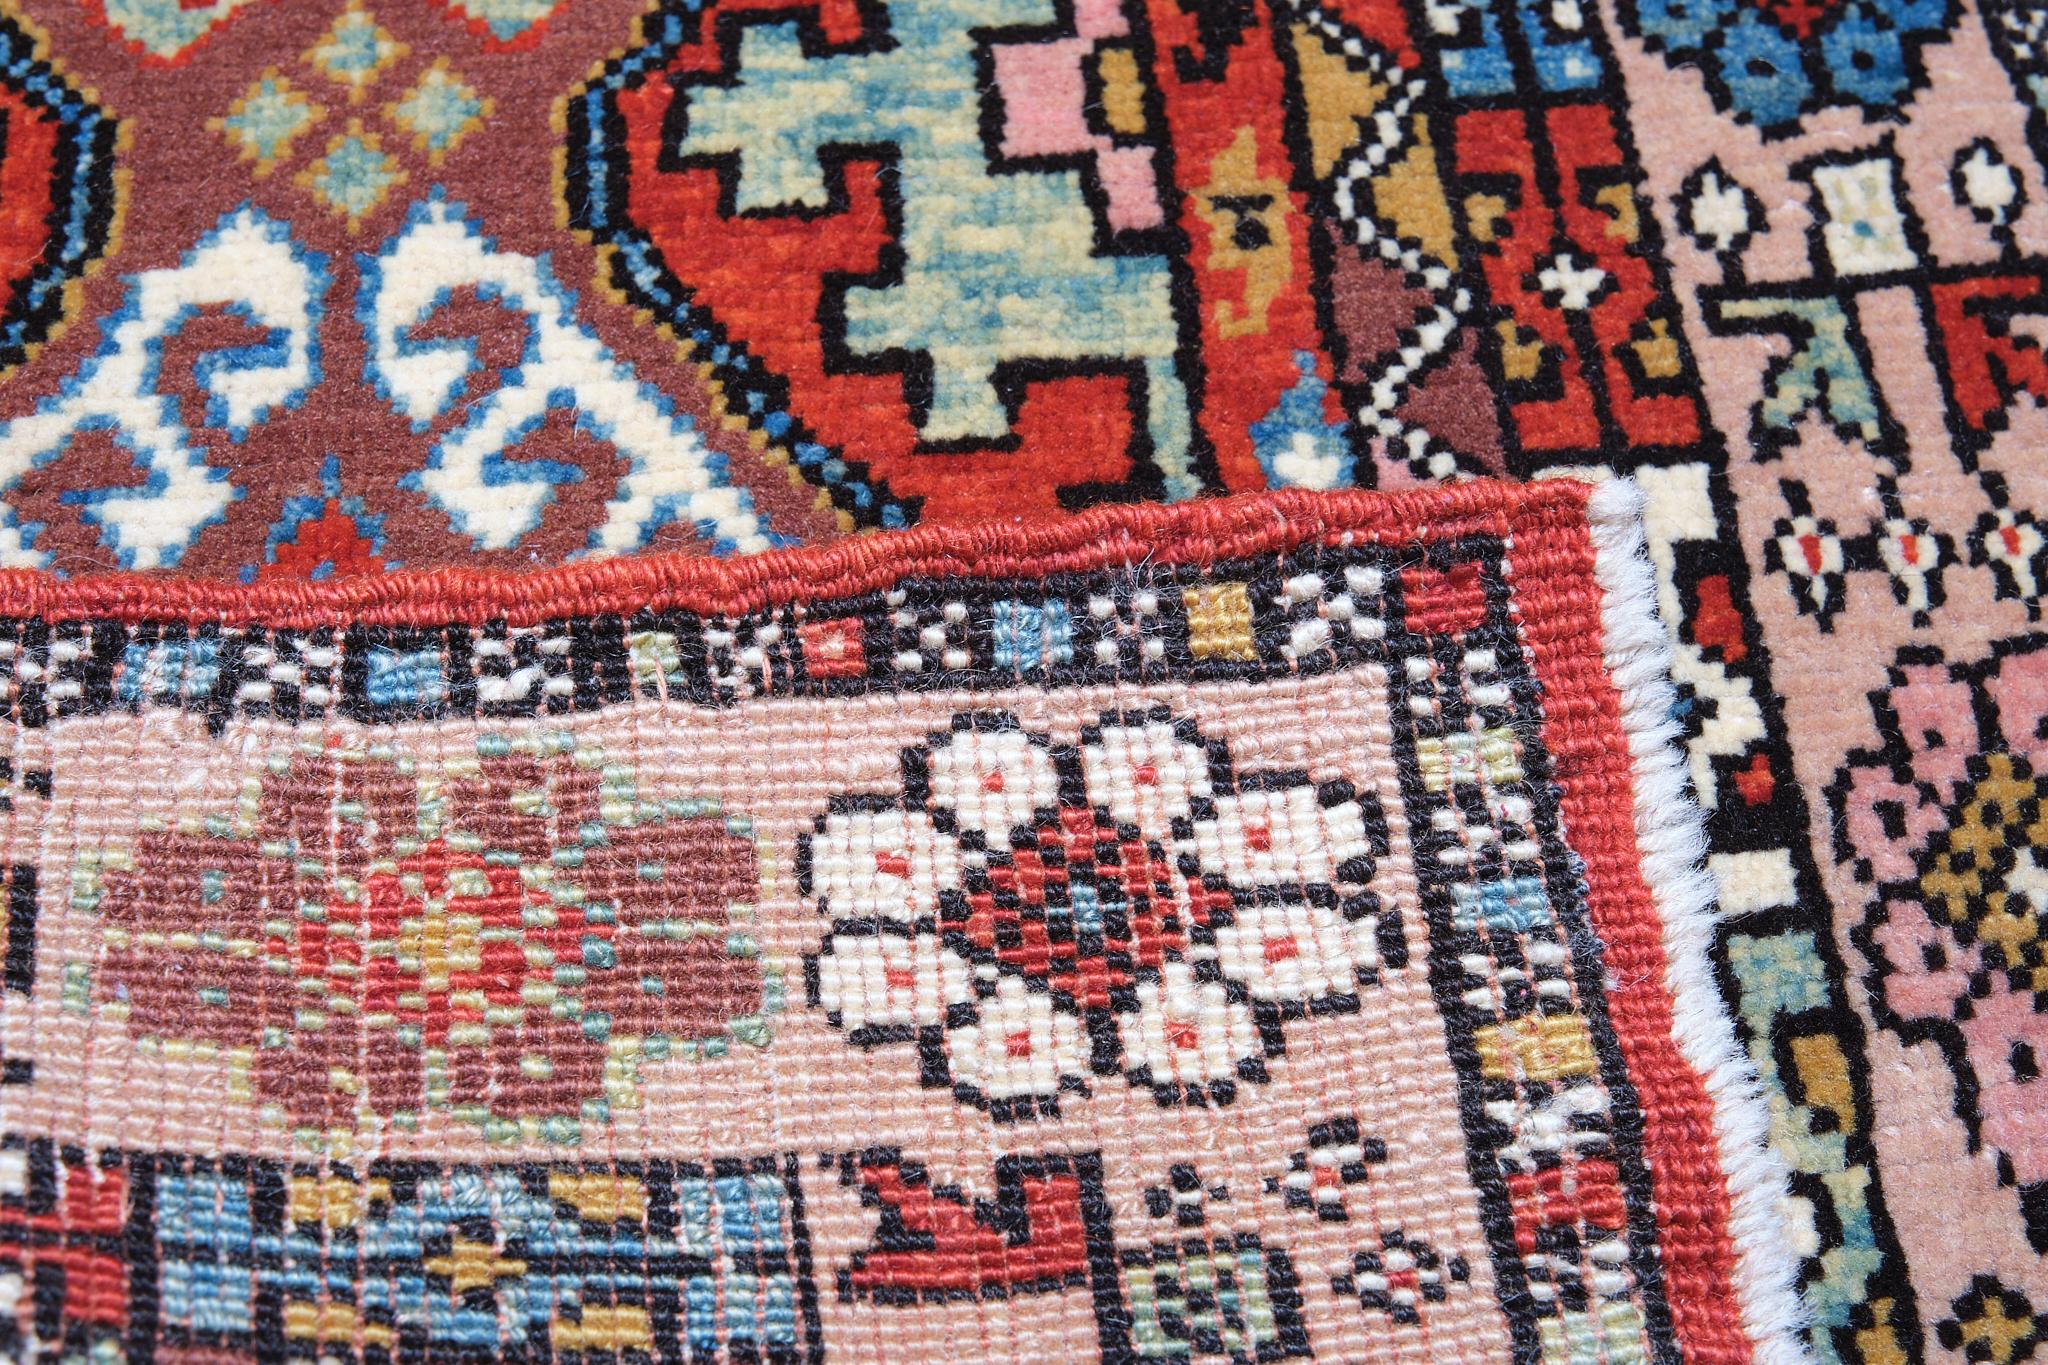 Hand-Woven Ararat Rugs Anatolian Yastik Rug Revival Turkish Wagireh Carpet Natural Dyed For Sale